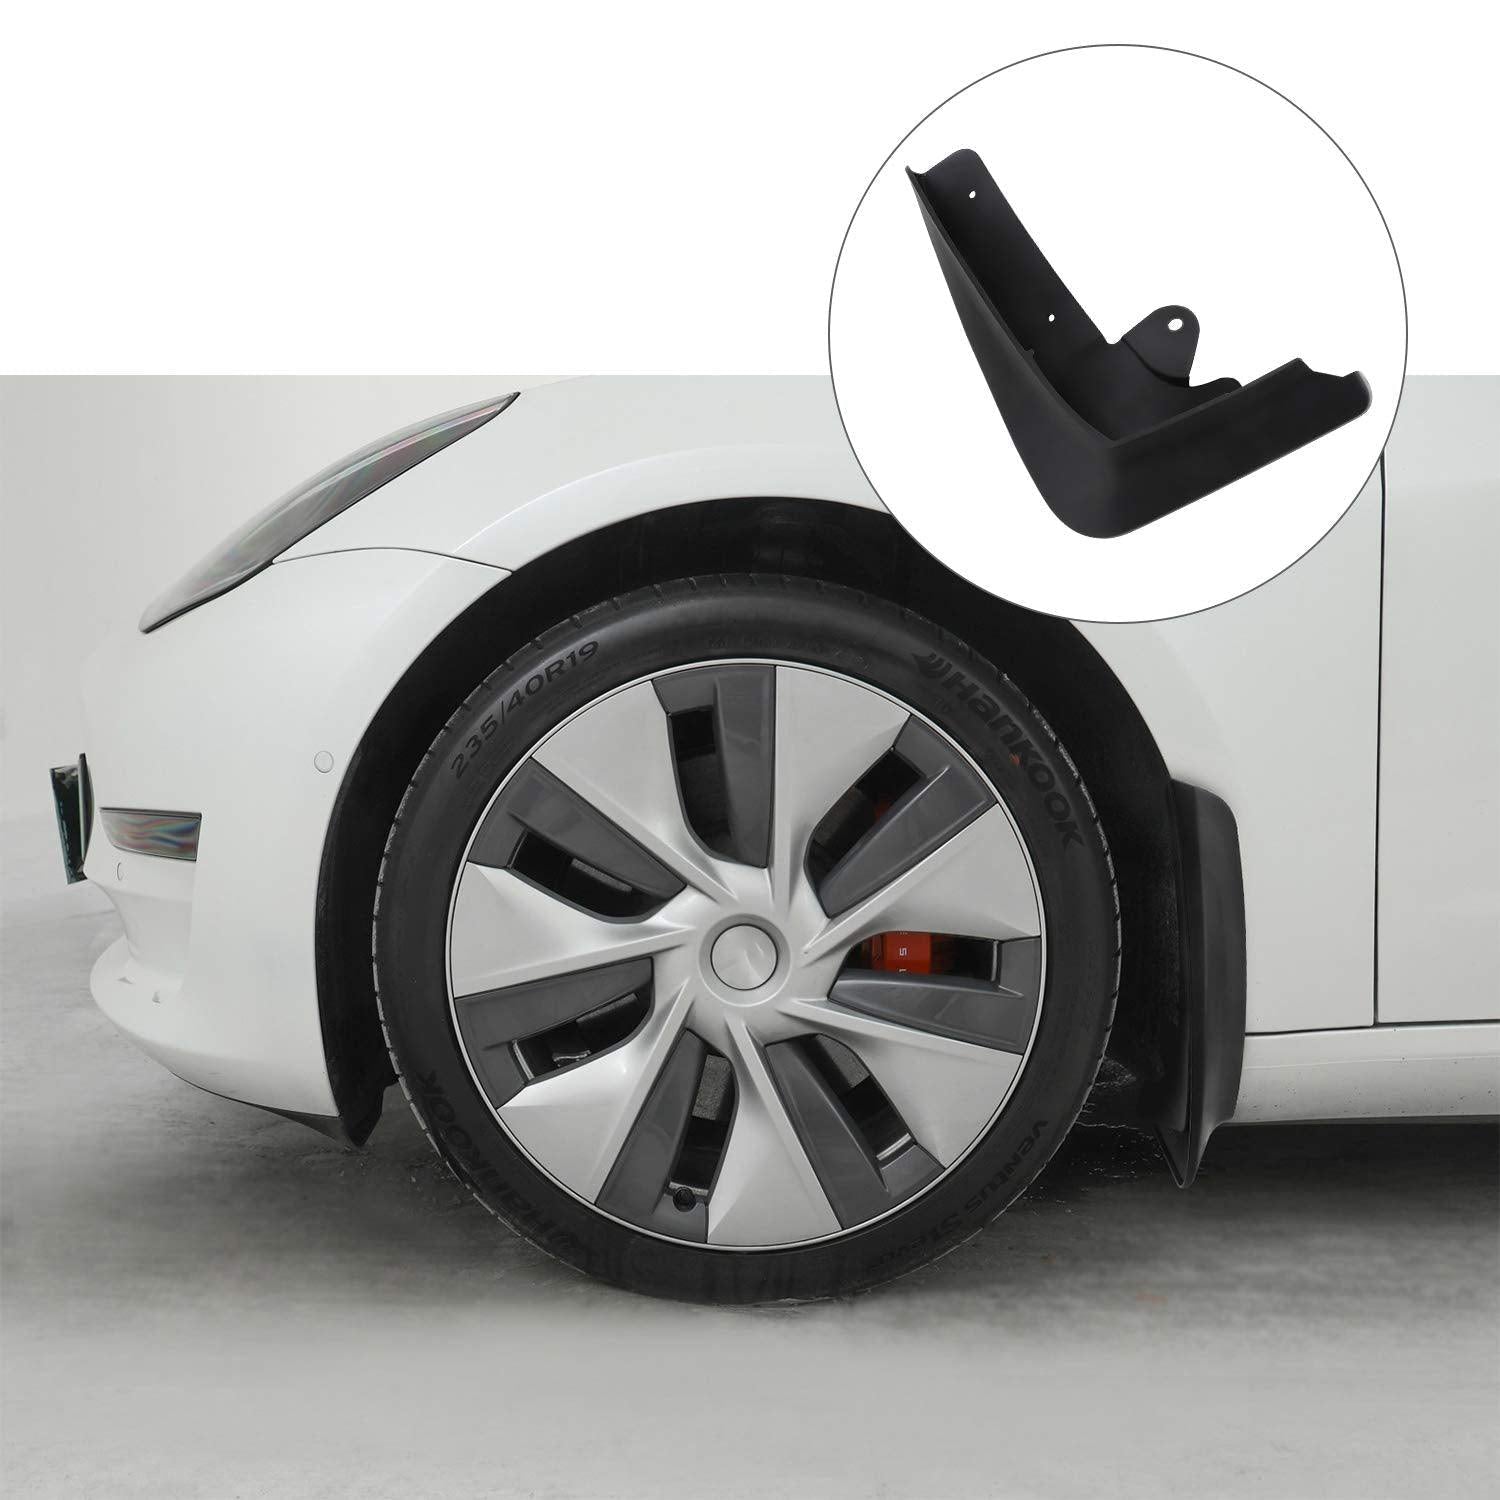 Garde-boue garde-boue pour Tesla Model X (4 pièces) (2015-2020)